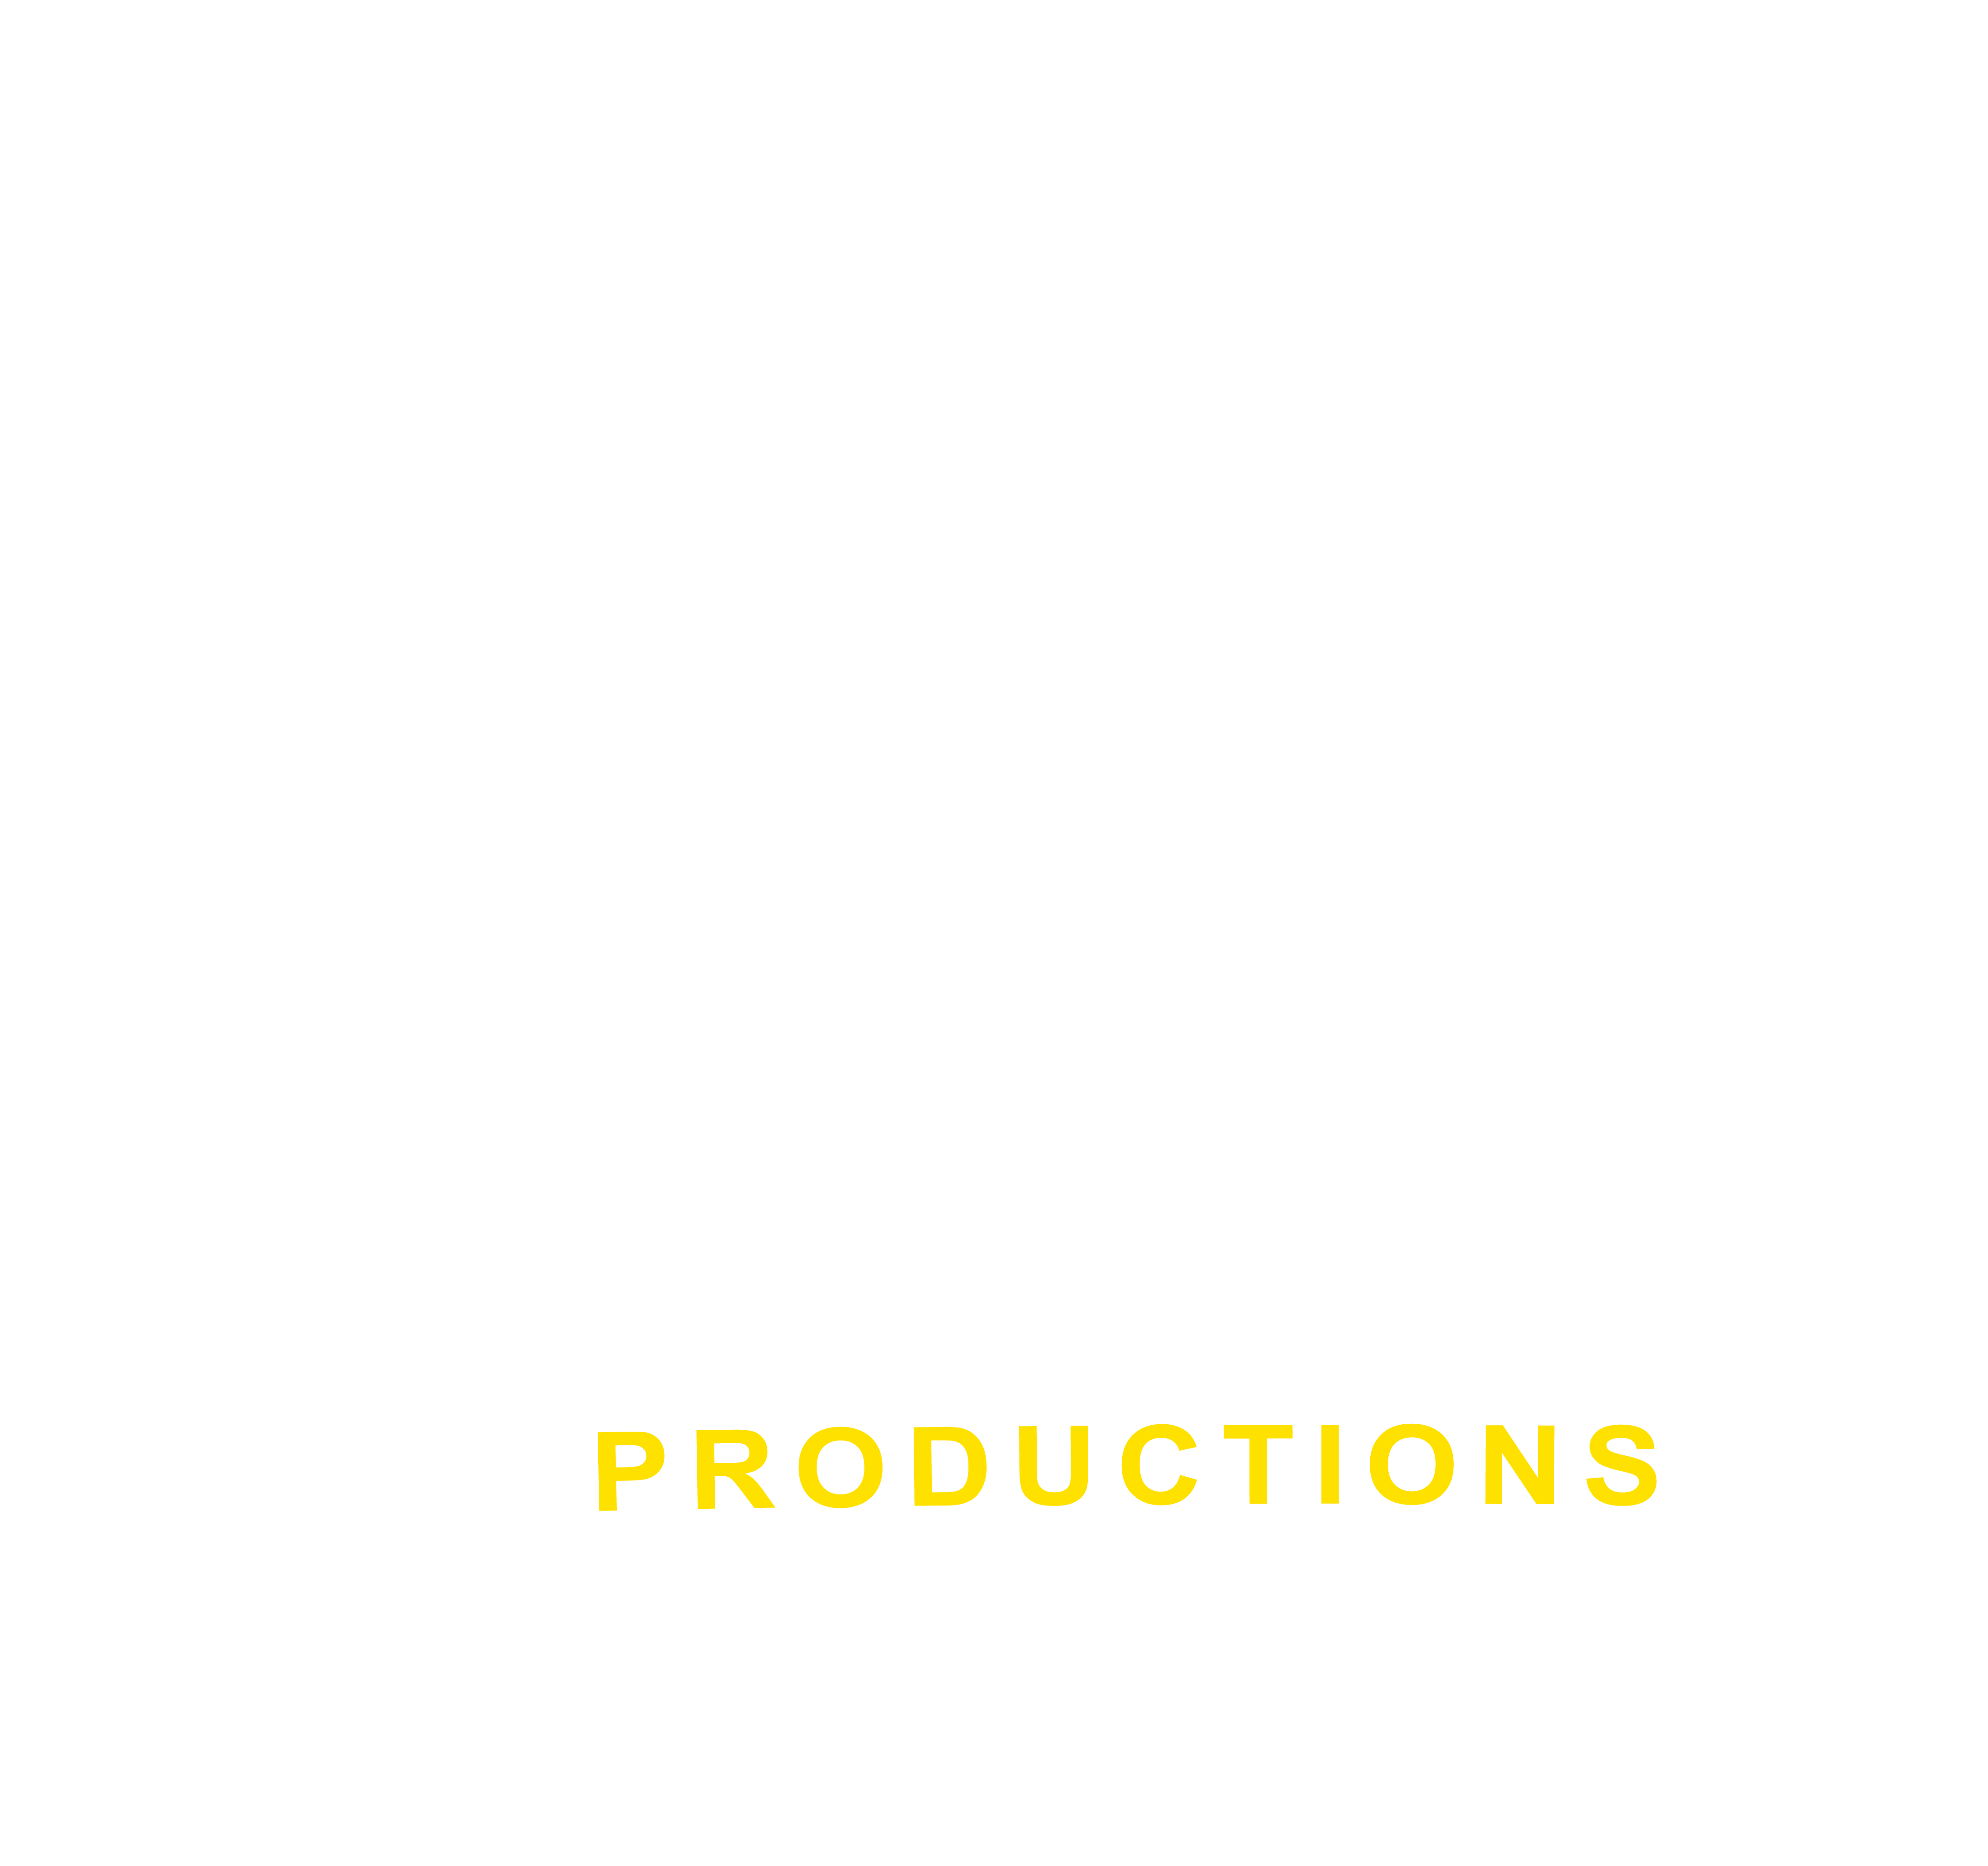 Melvin Audaz's Portfolio